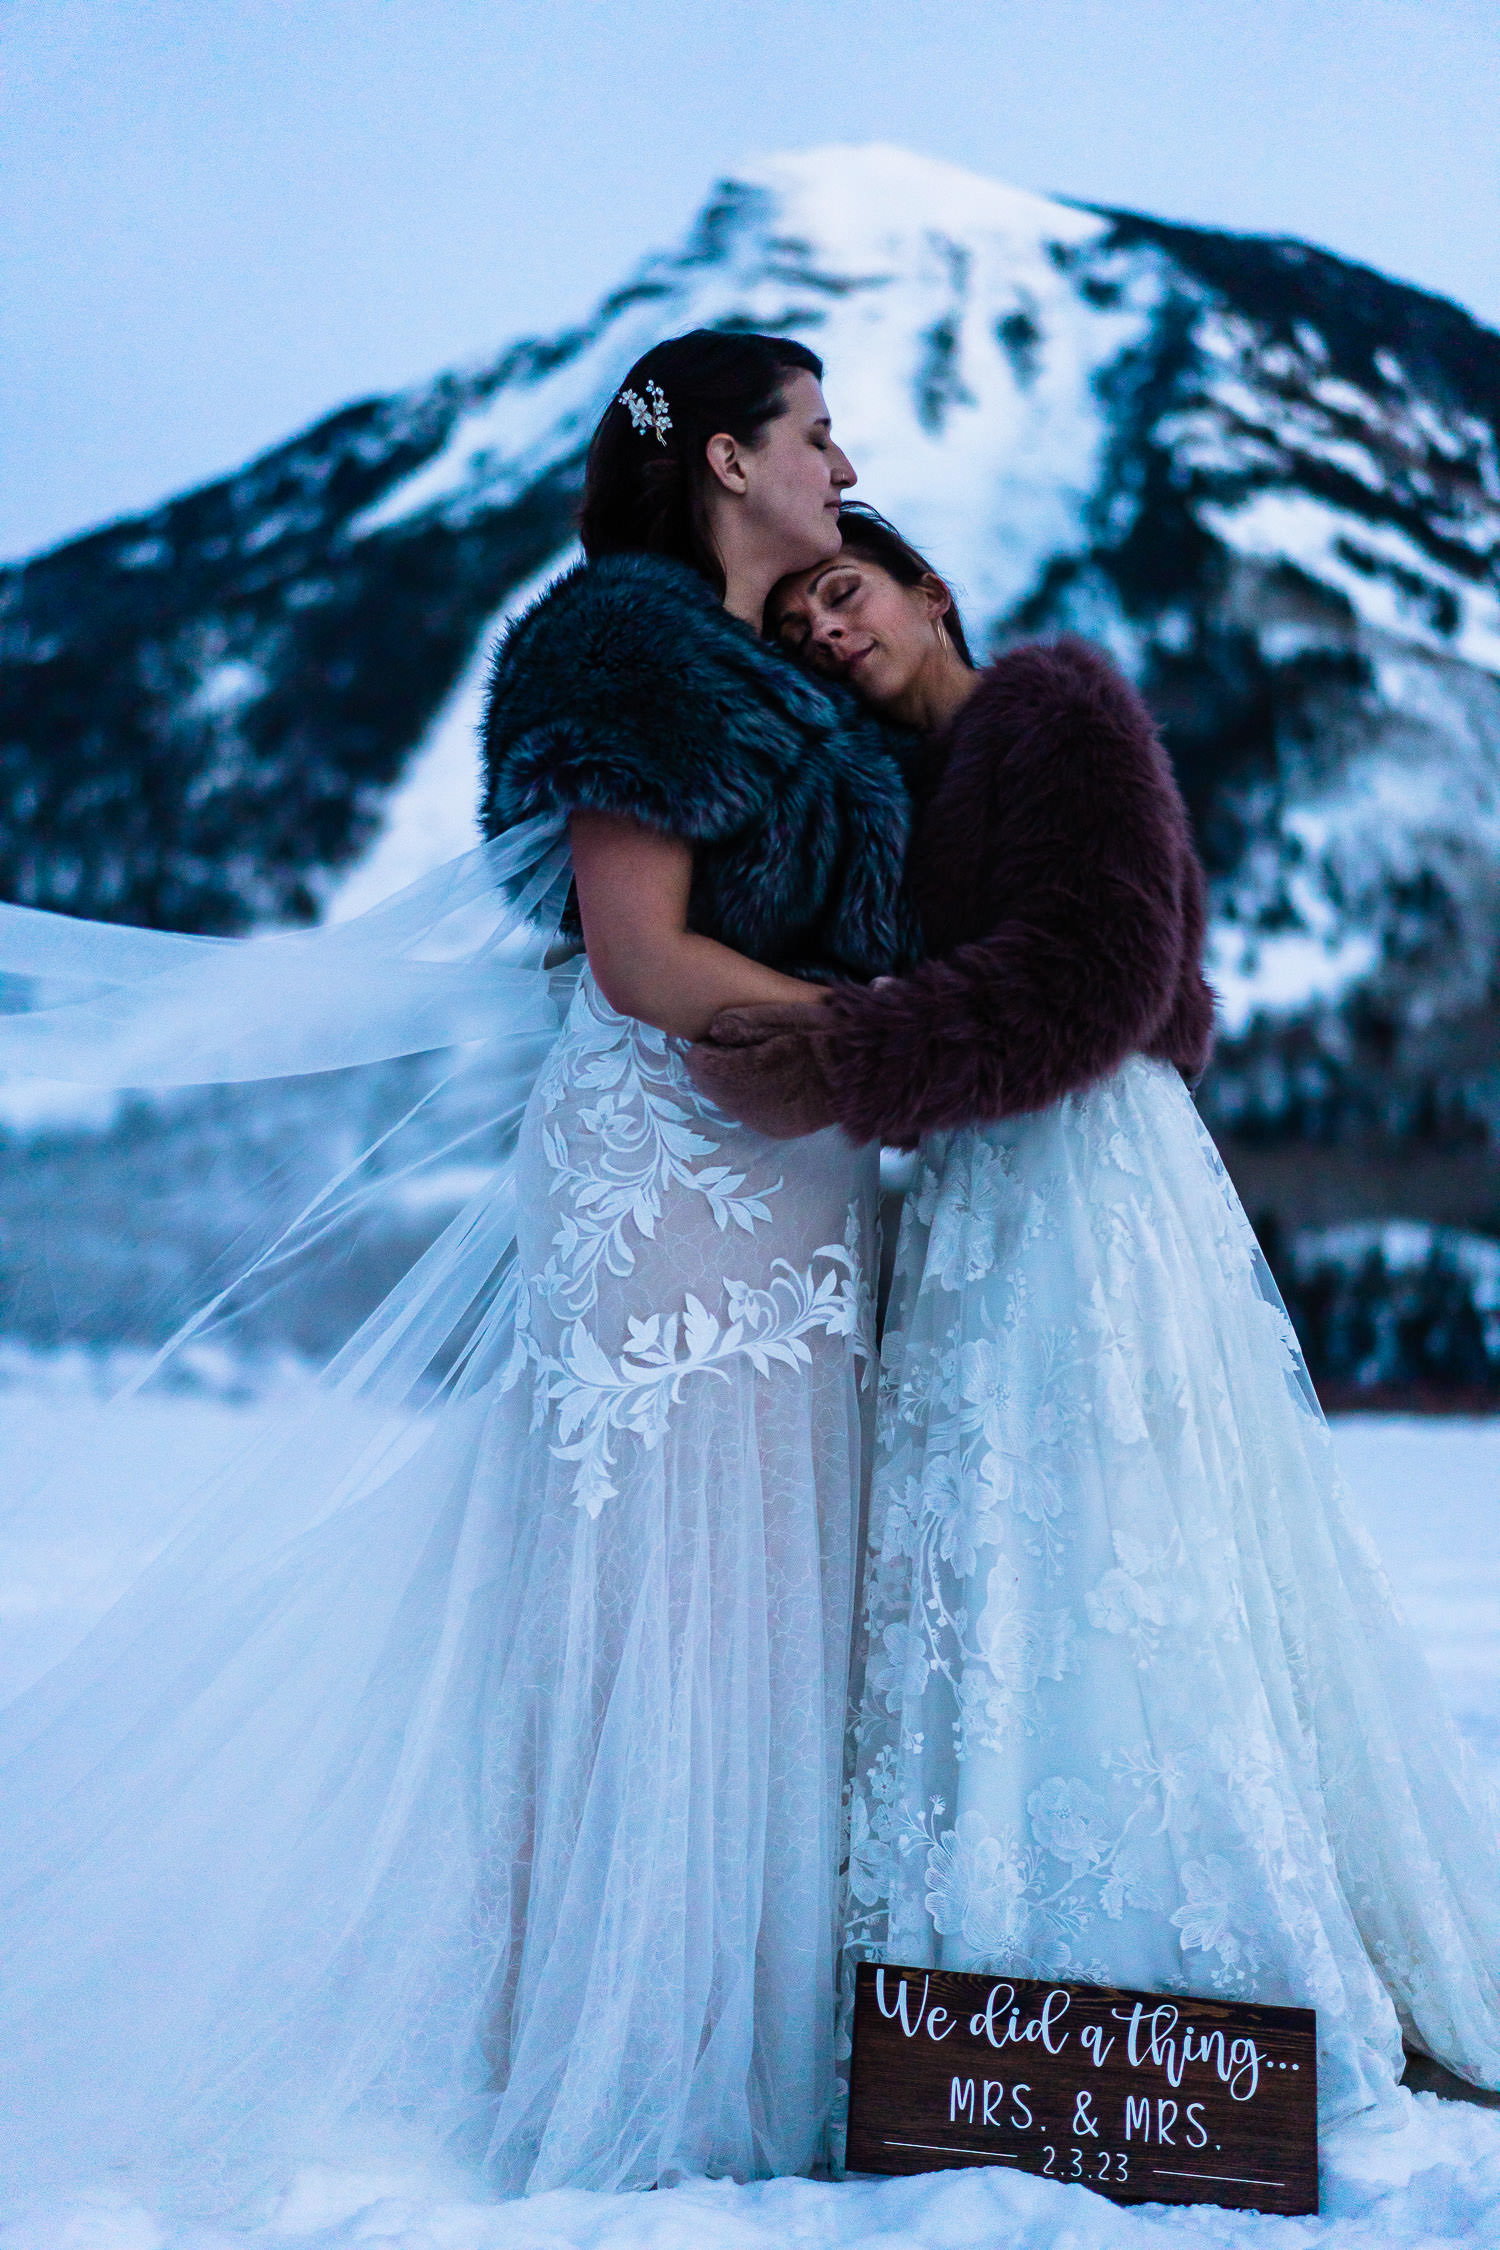 newlywed brides snuggling near a snowy mountain